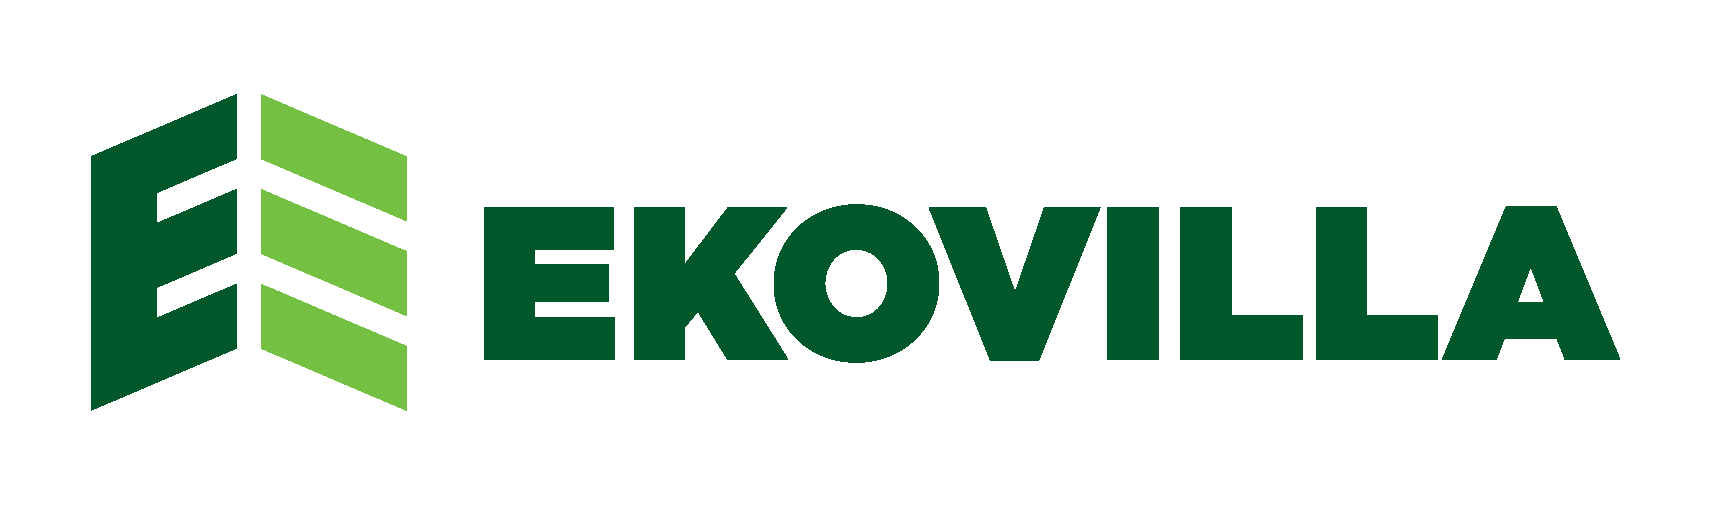 Ekovilla logo